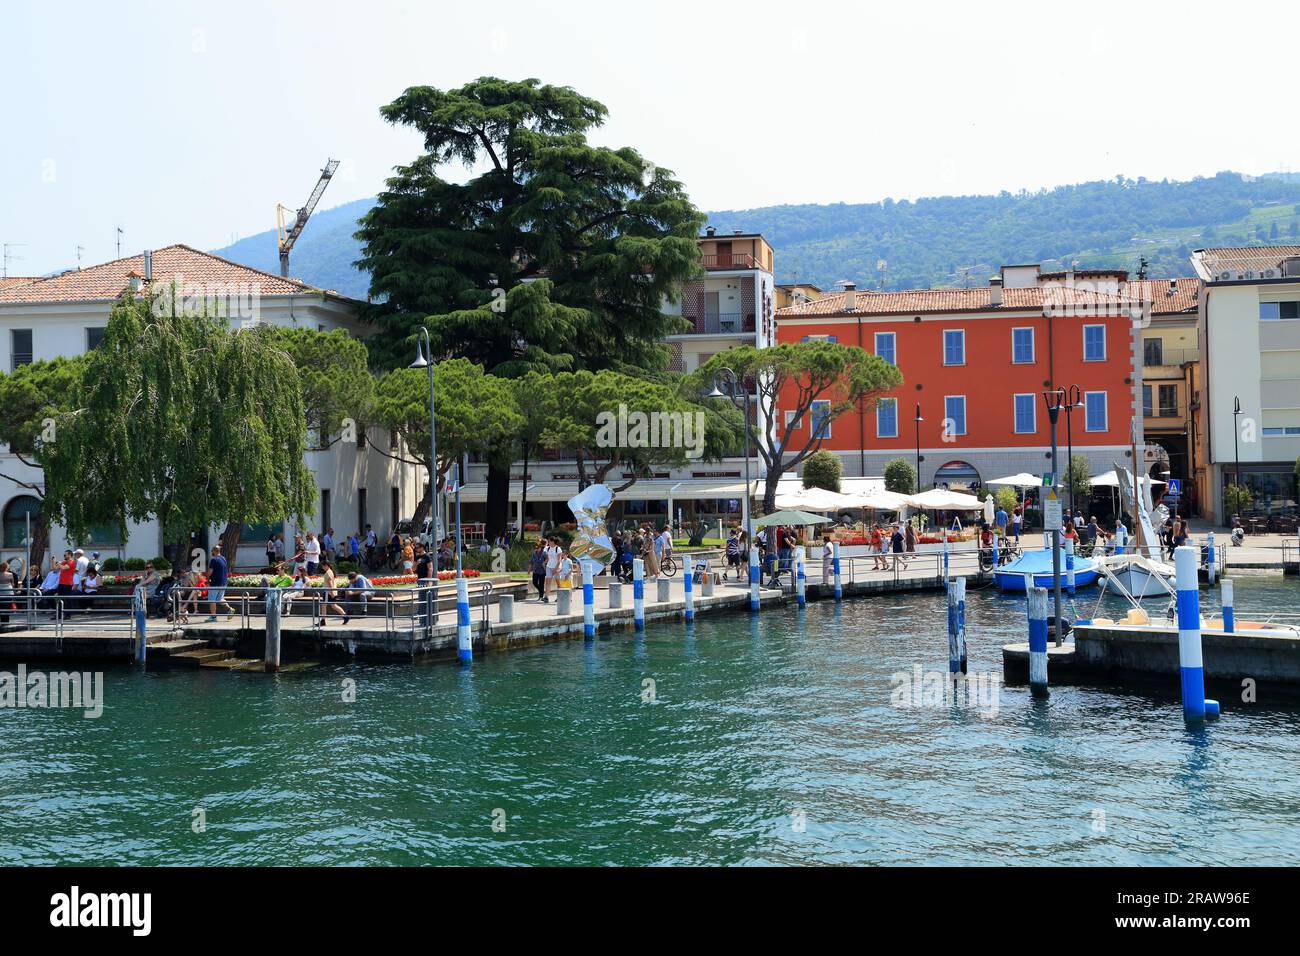 Lake Iseo, Iseo town. Lago d'Iseo, Iseosee, Italy Stock Photo